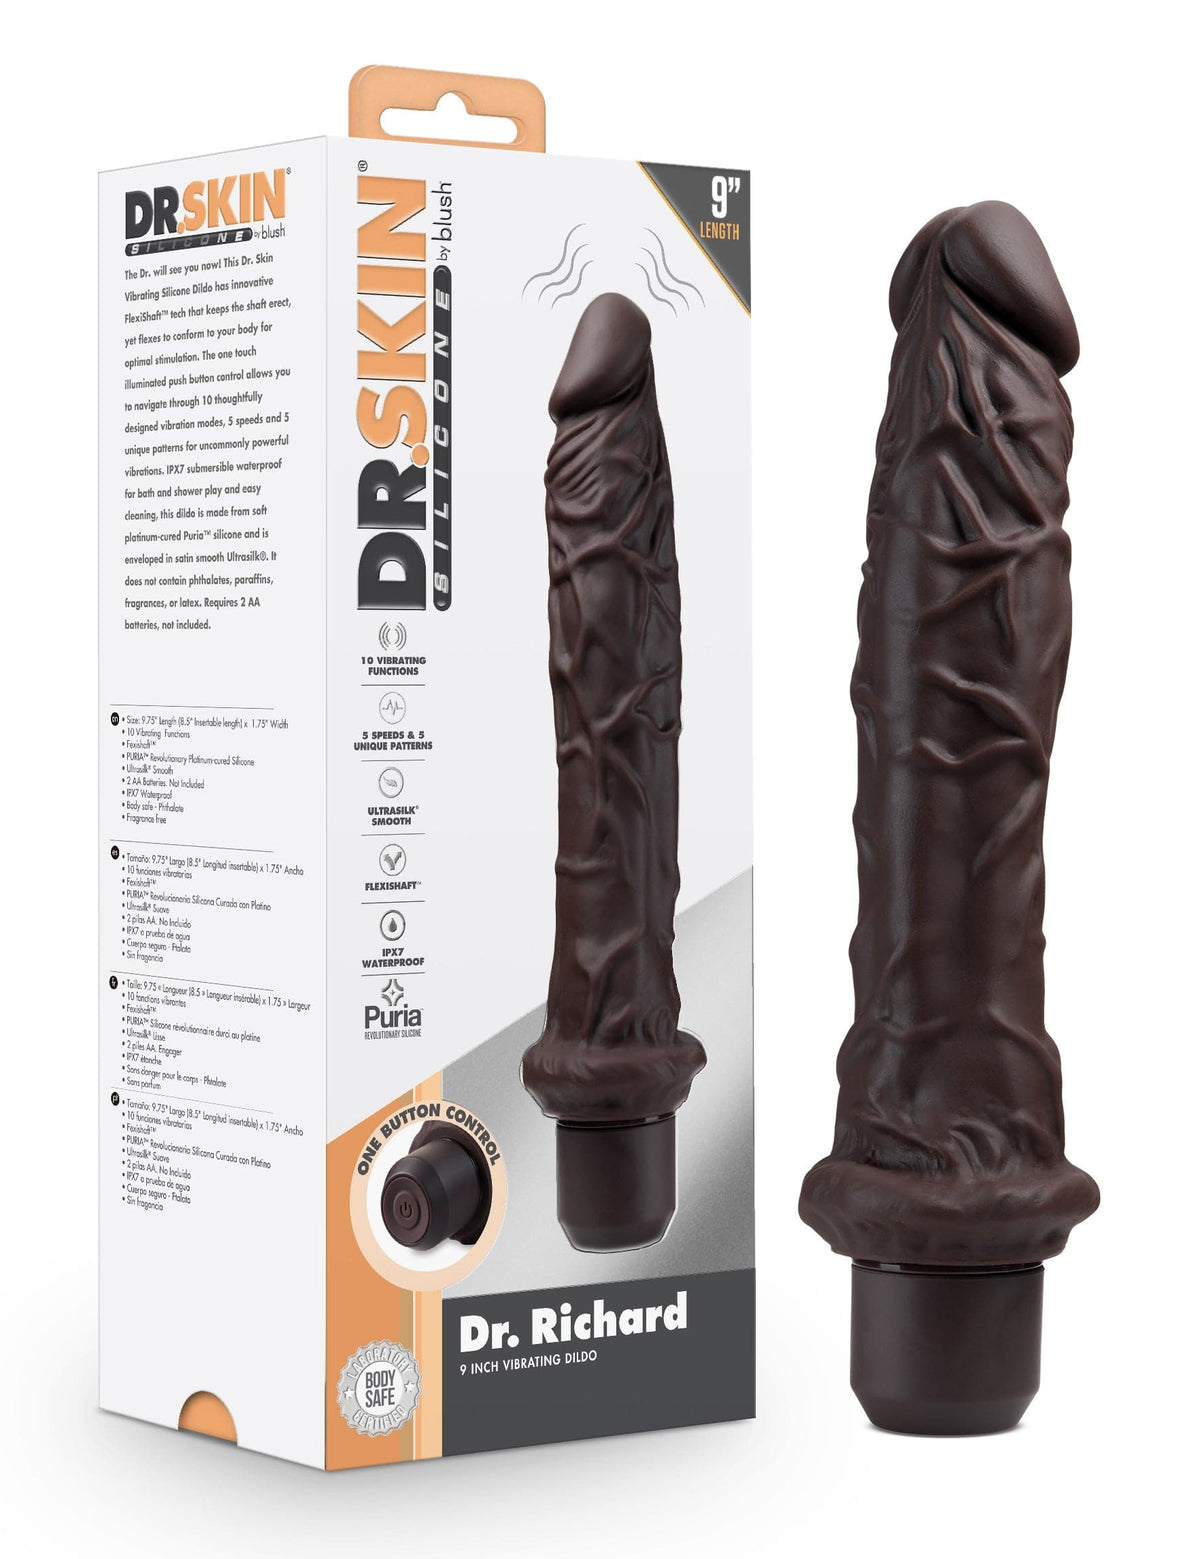 dr skin silicone dr richard 9 inch vibrating dildo brown